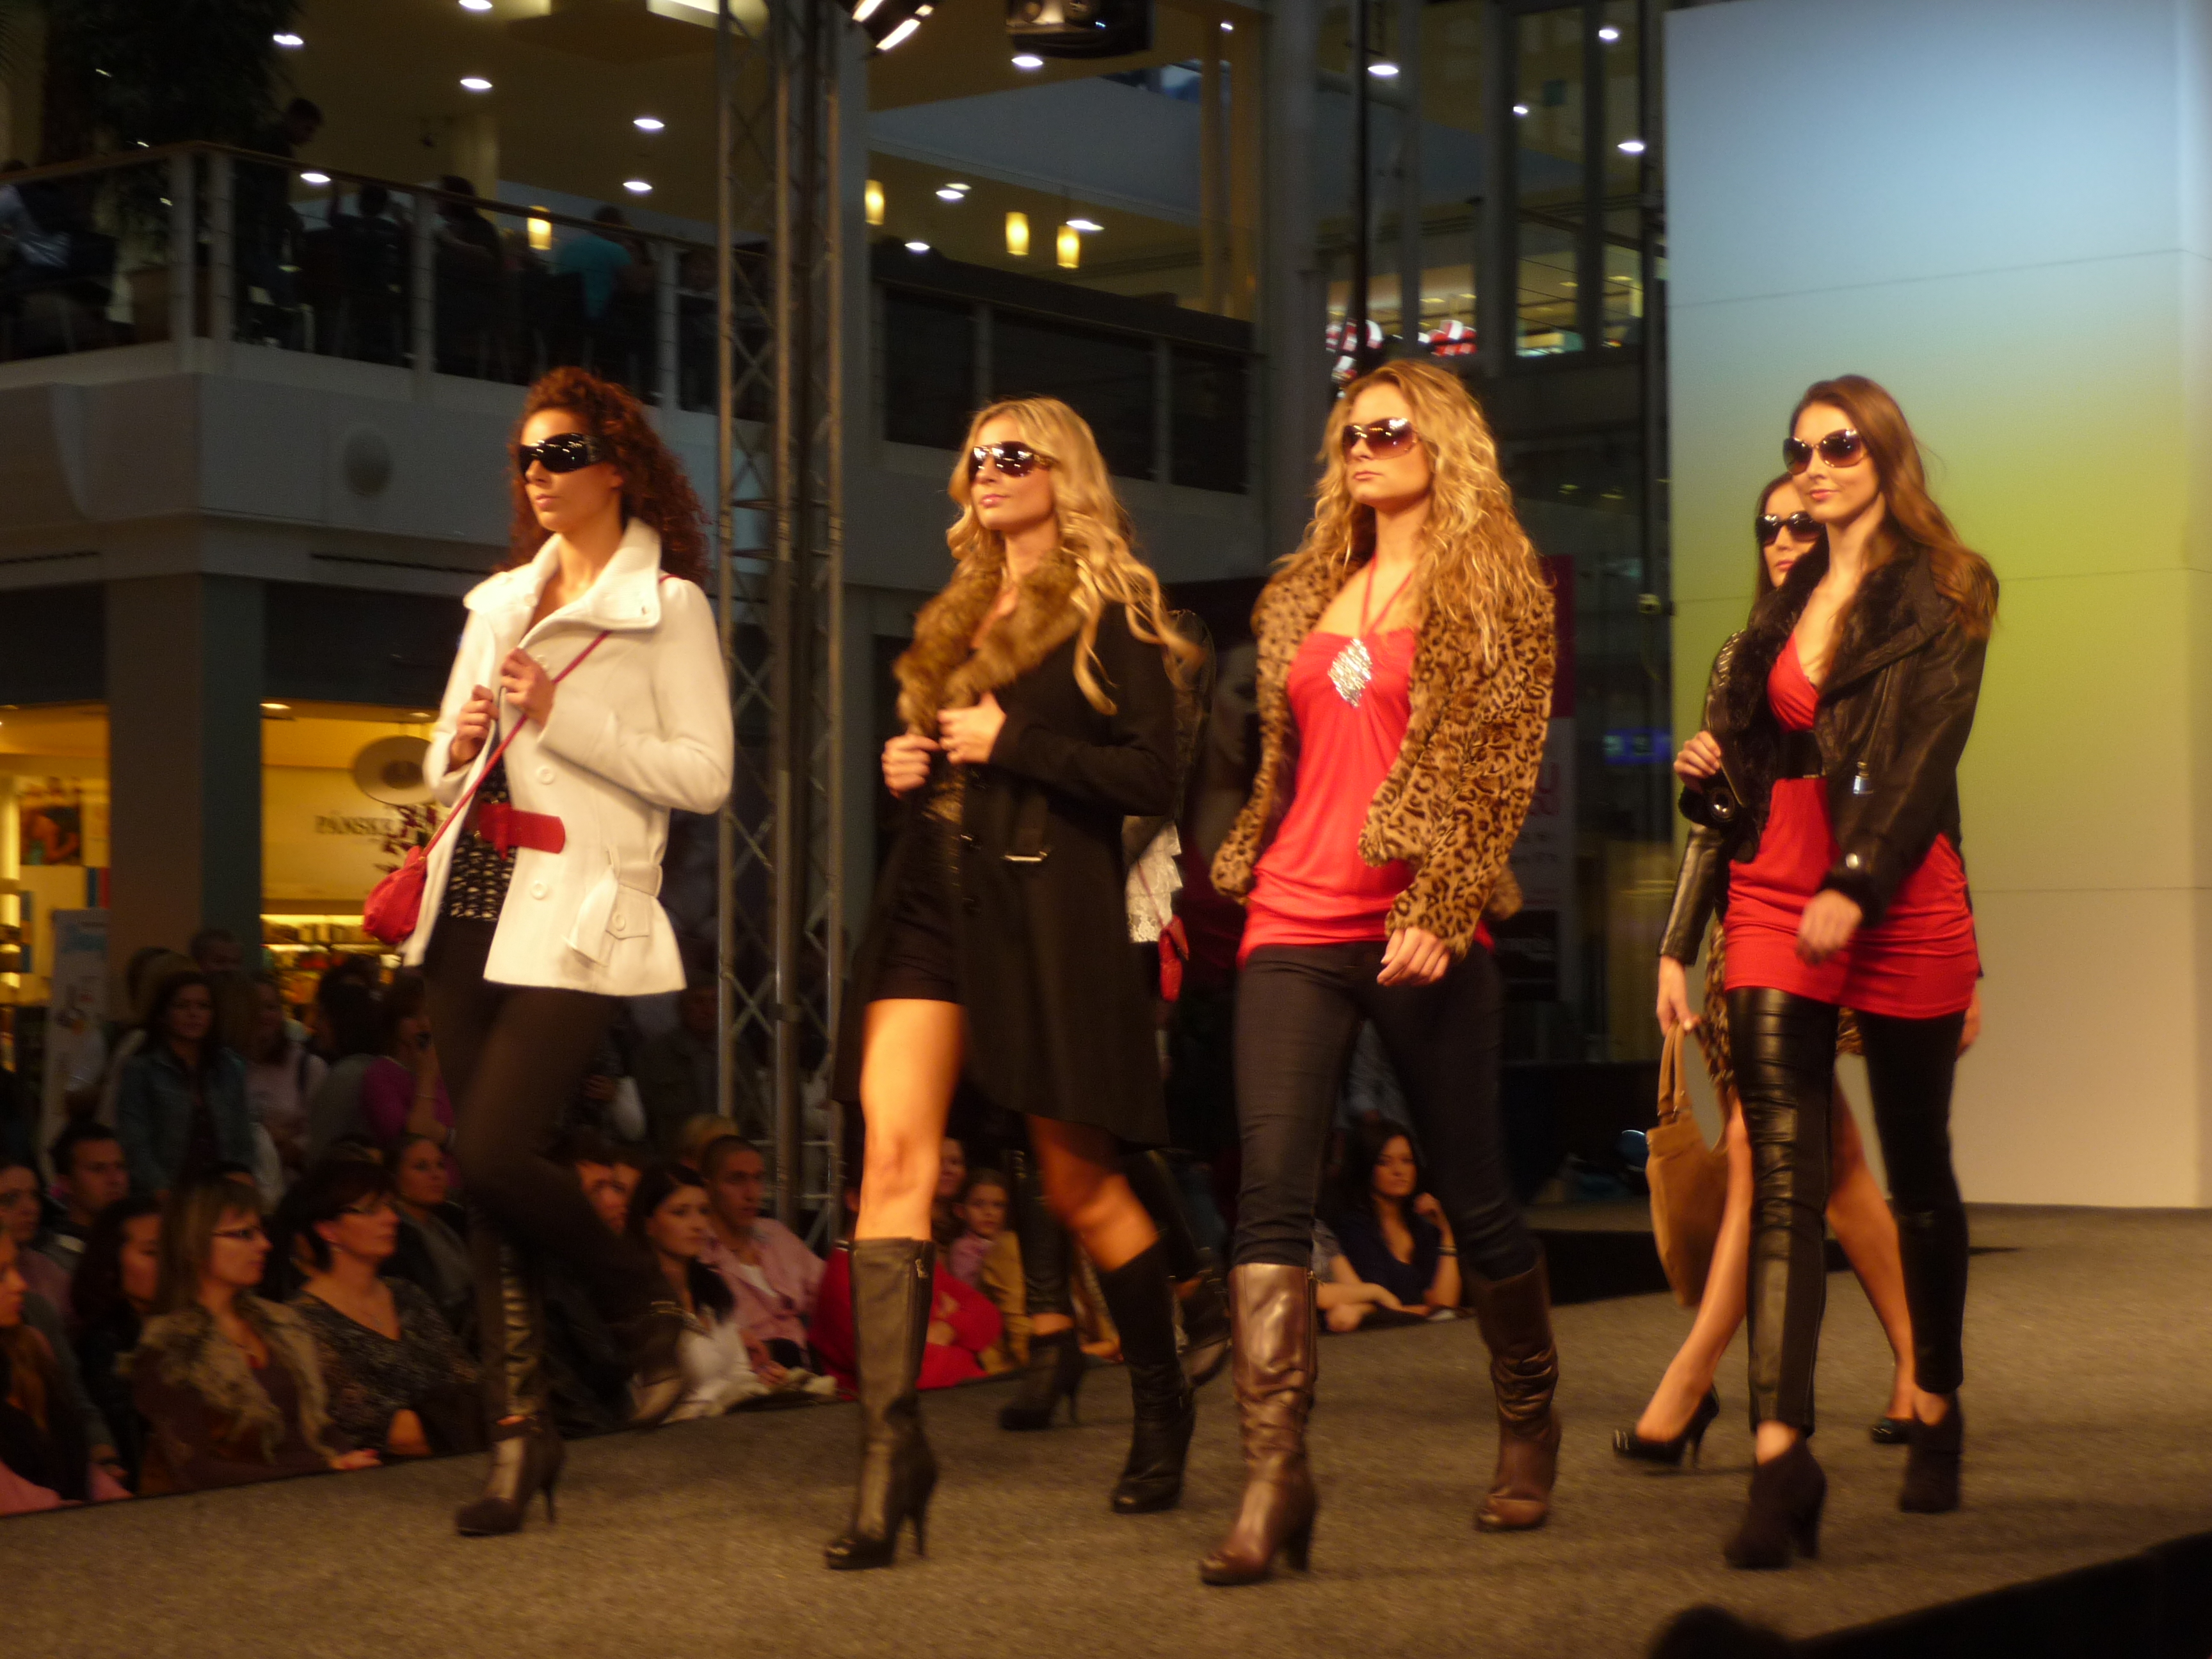 File:Olympia Fashion Show 2010 (22).jpg - Wikimedia Commons